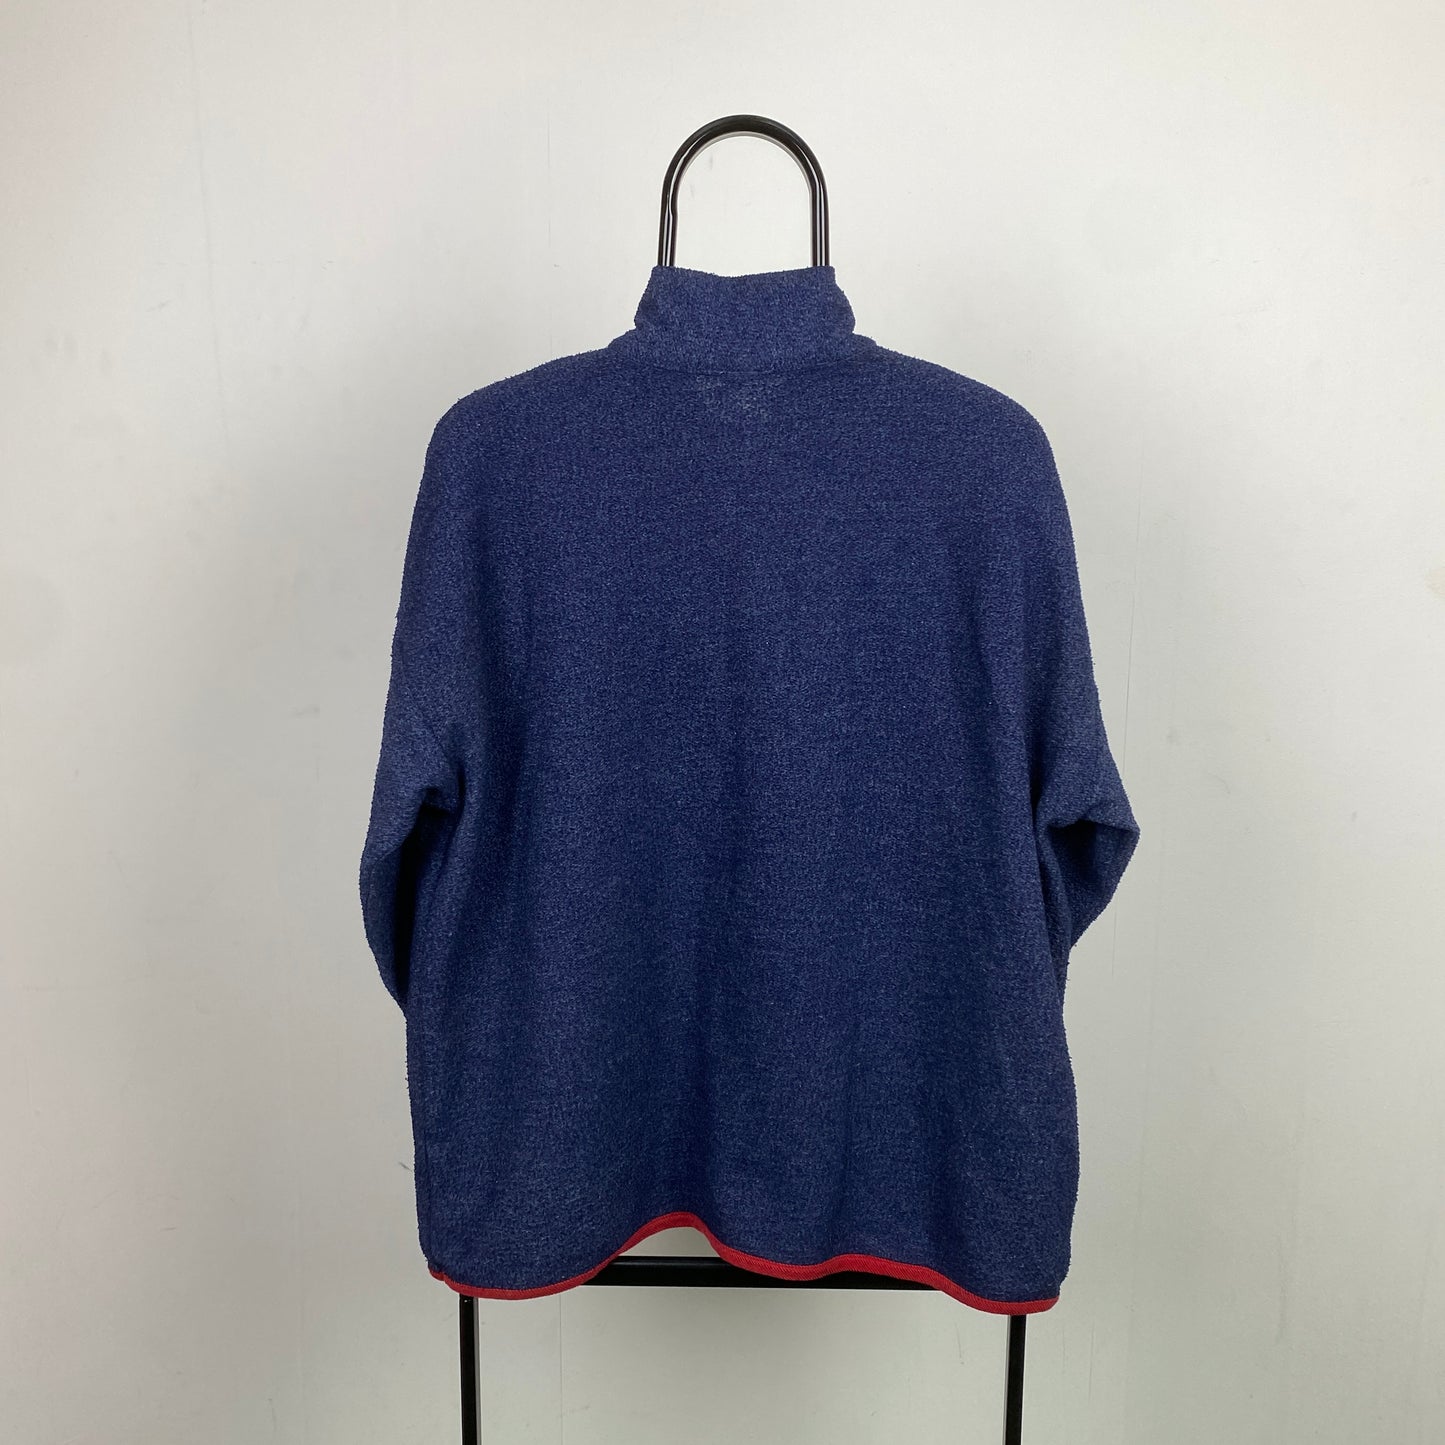 90s Nike Fleece 1/4 Zip Sweatshirt Blue XL